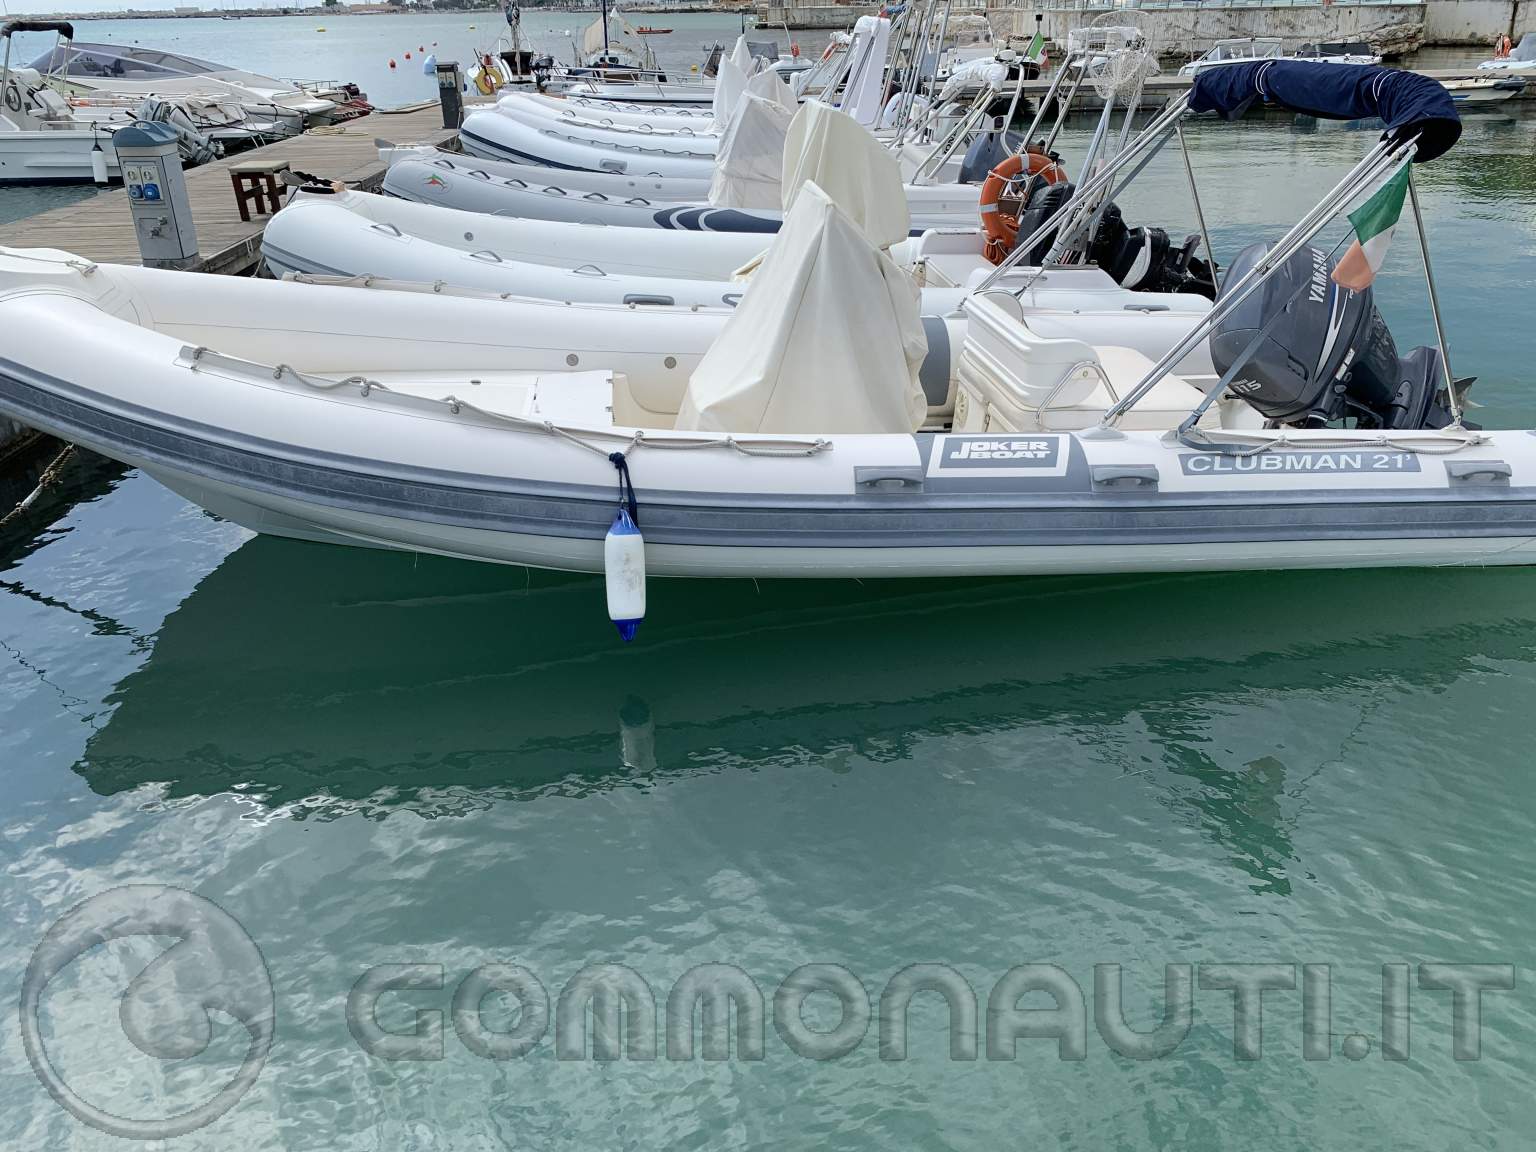 Gommone Joker boat Clubman 21 Yamaha 115 115 HP 4 tempi